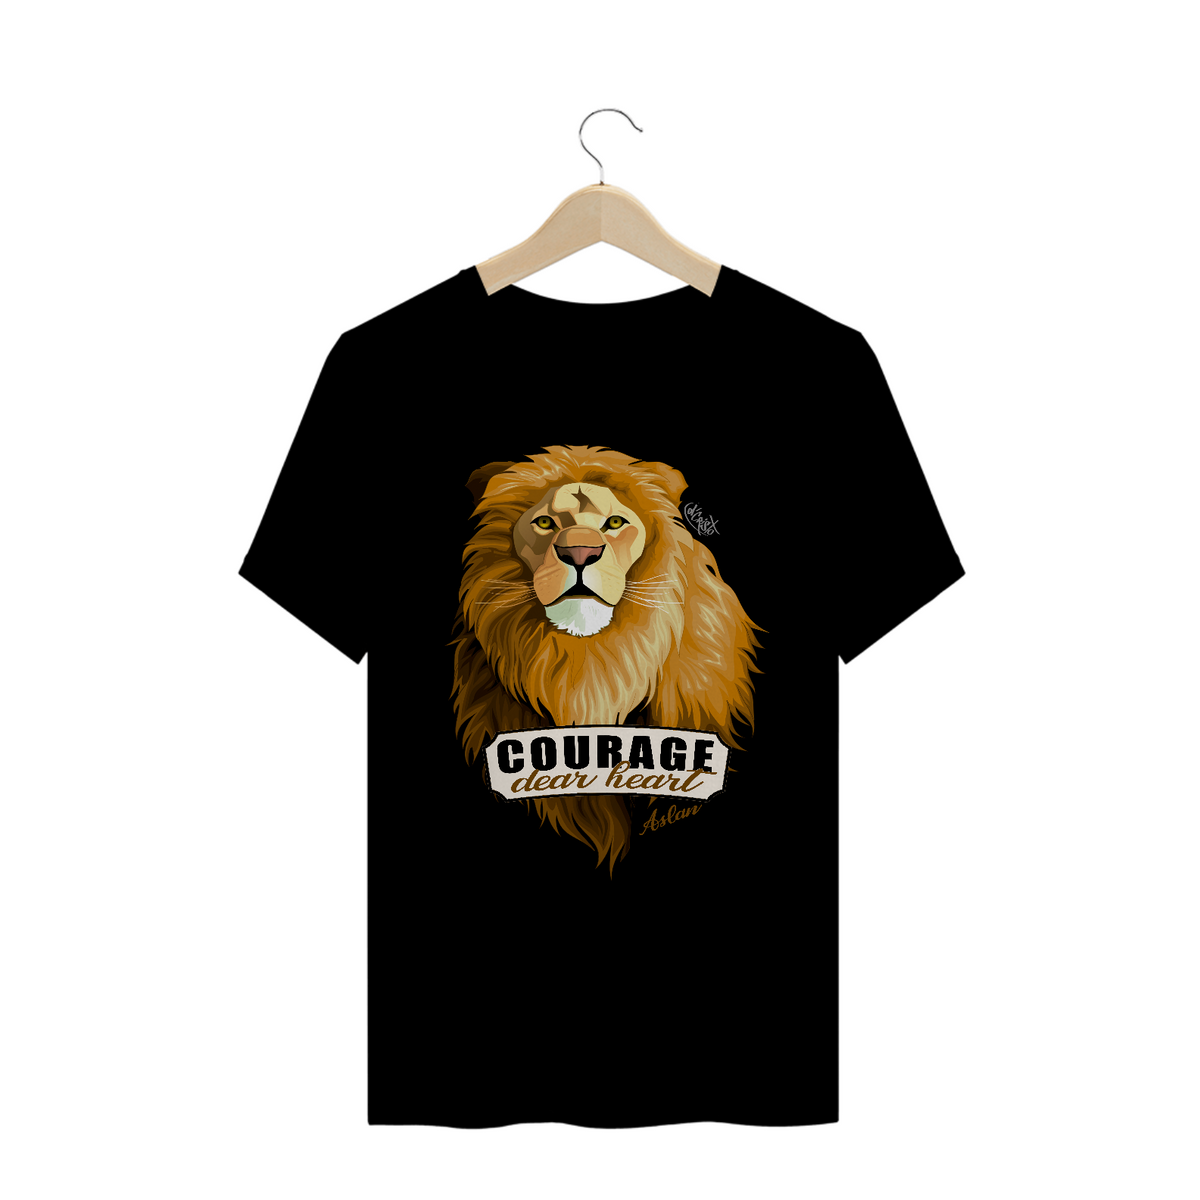 Nome do produto: Camiseta Aslan Courage [As Crônicas de Nárnia]